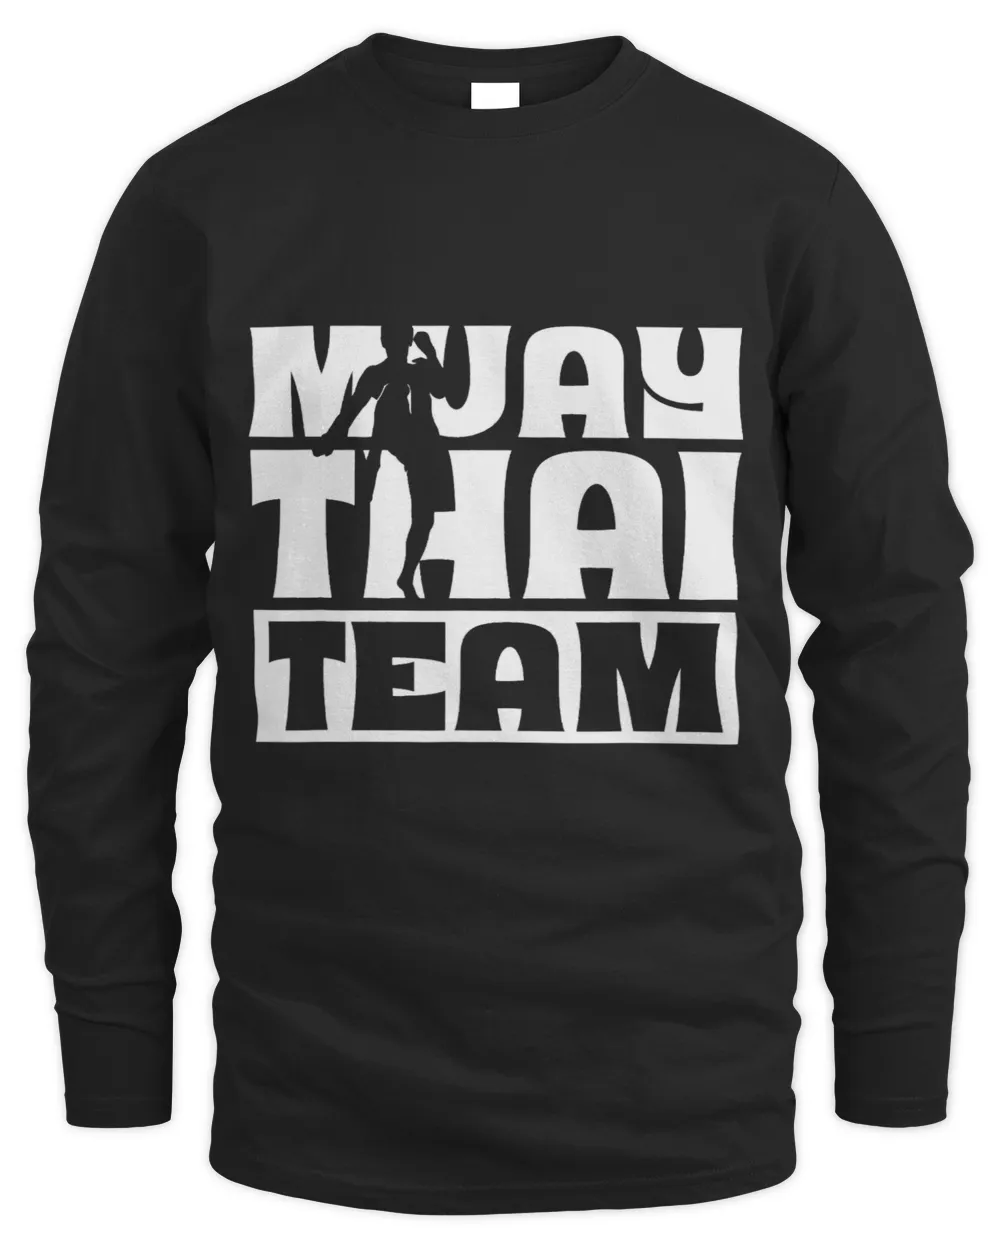 Muay Thai Team Boxing Martial Arts Fighter